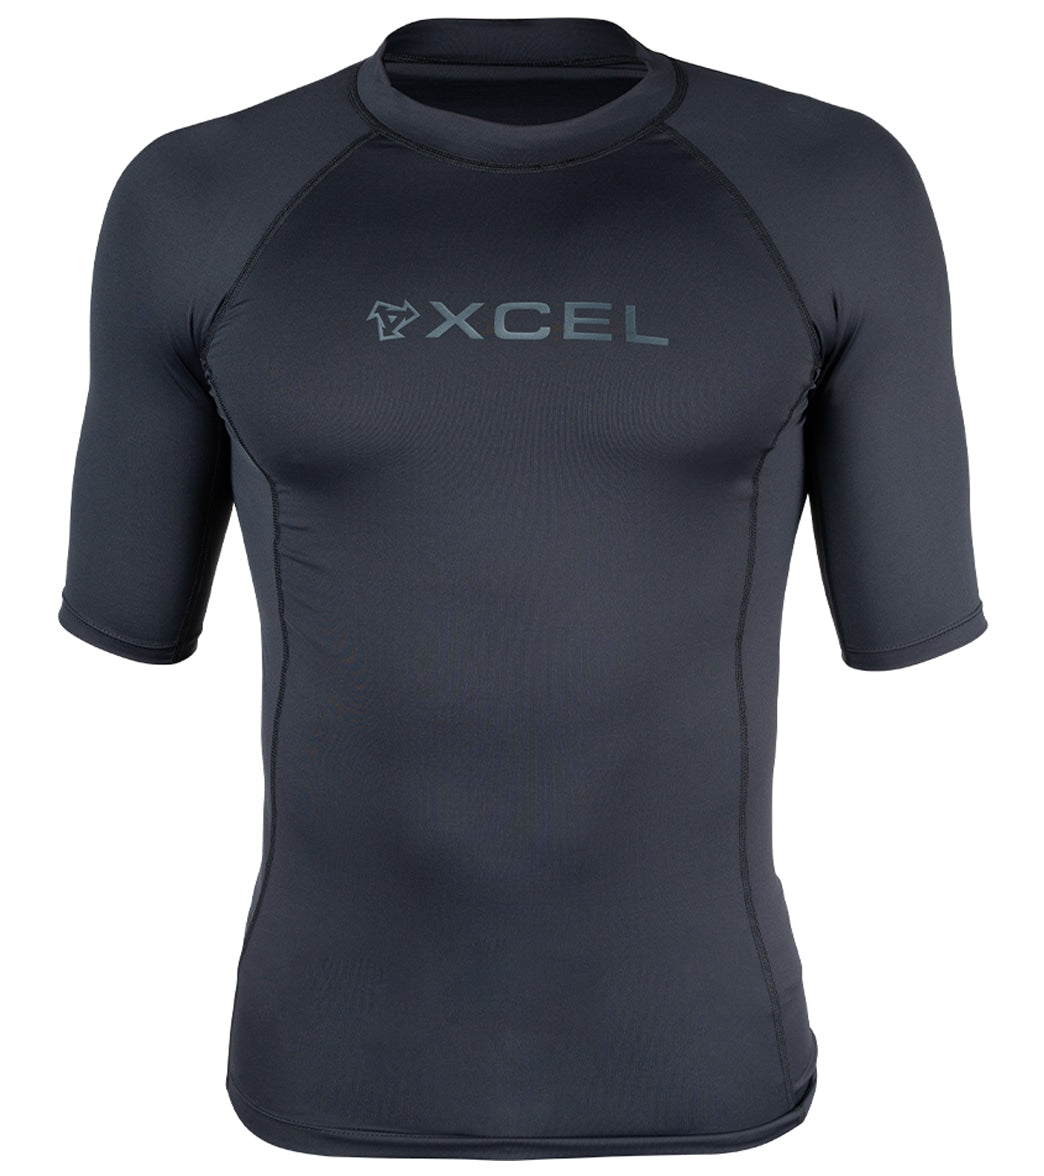 Xcel Women's Premium Stretch Short Sleeve Rash Guard with Key